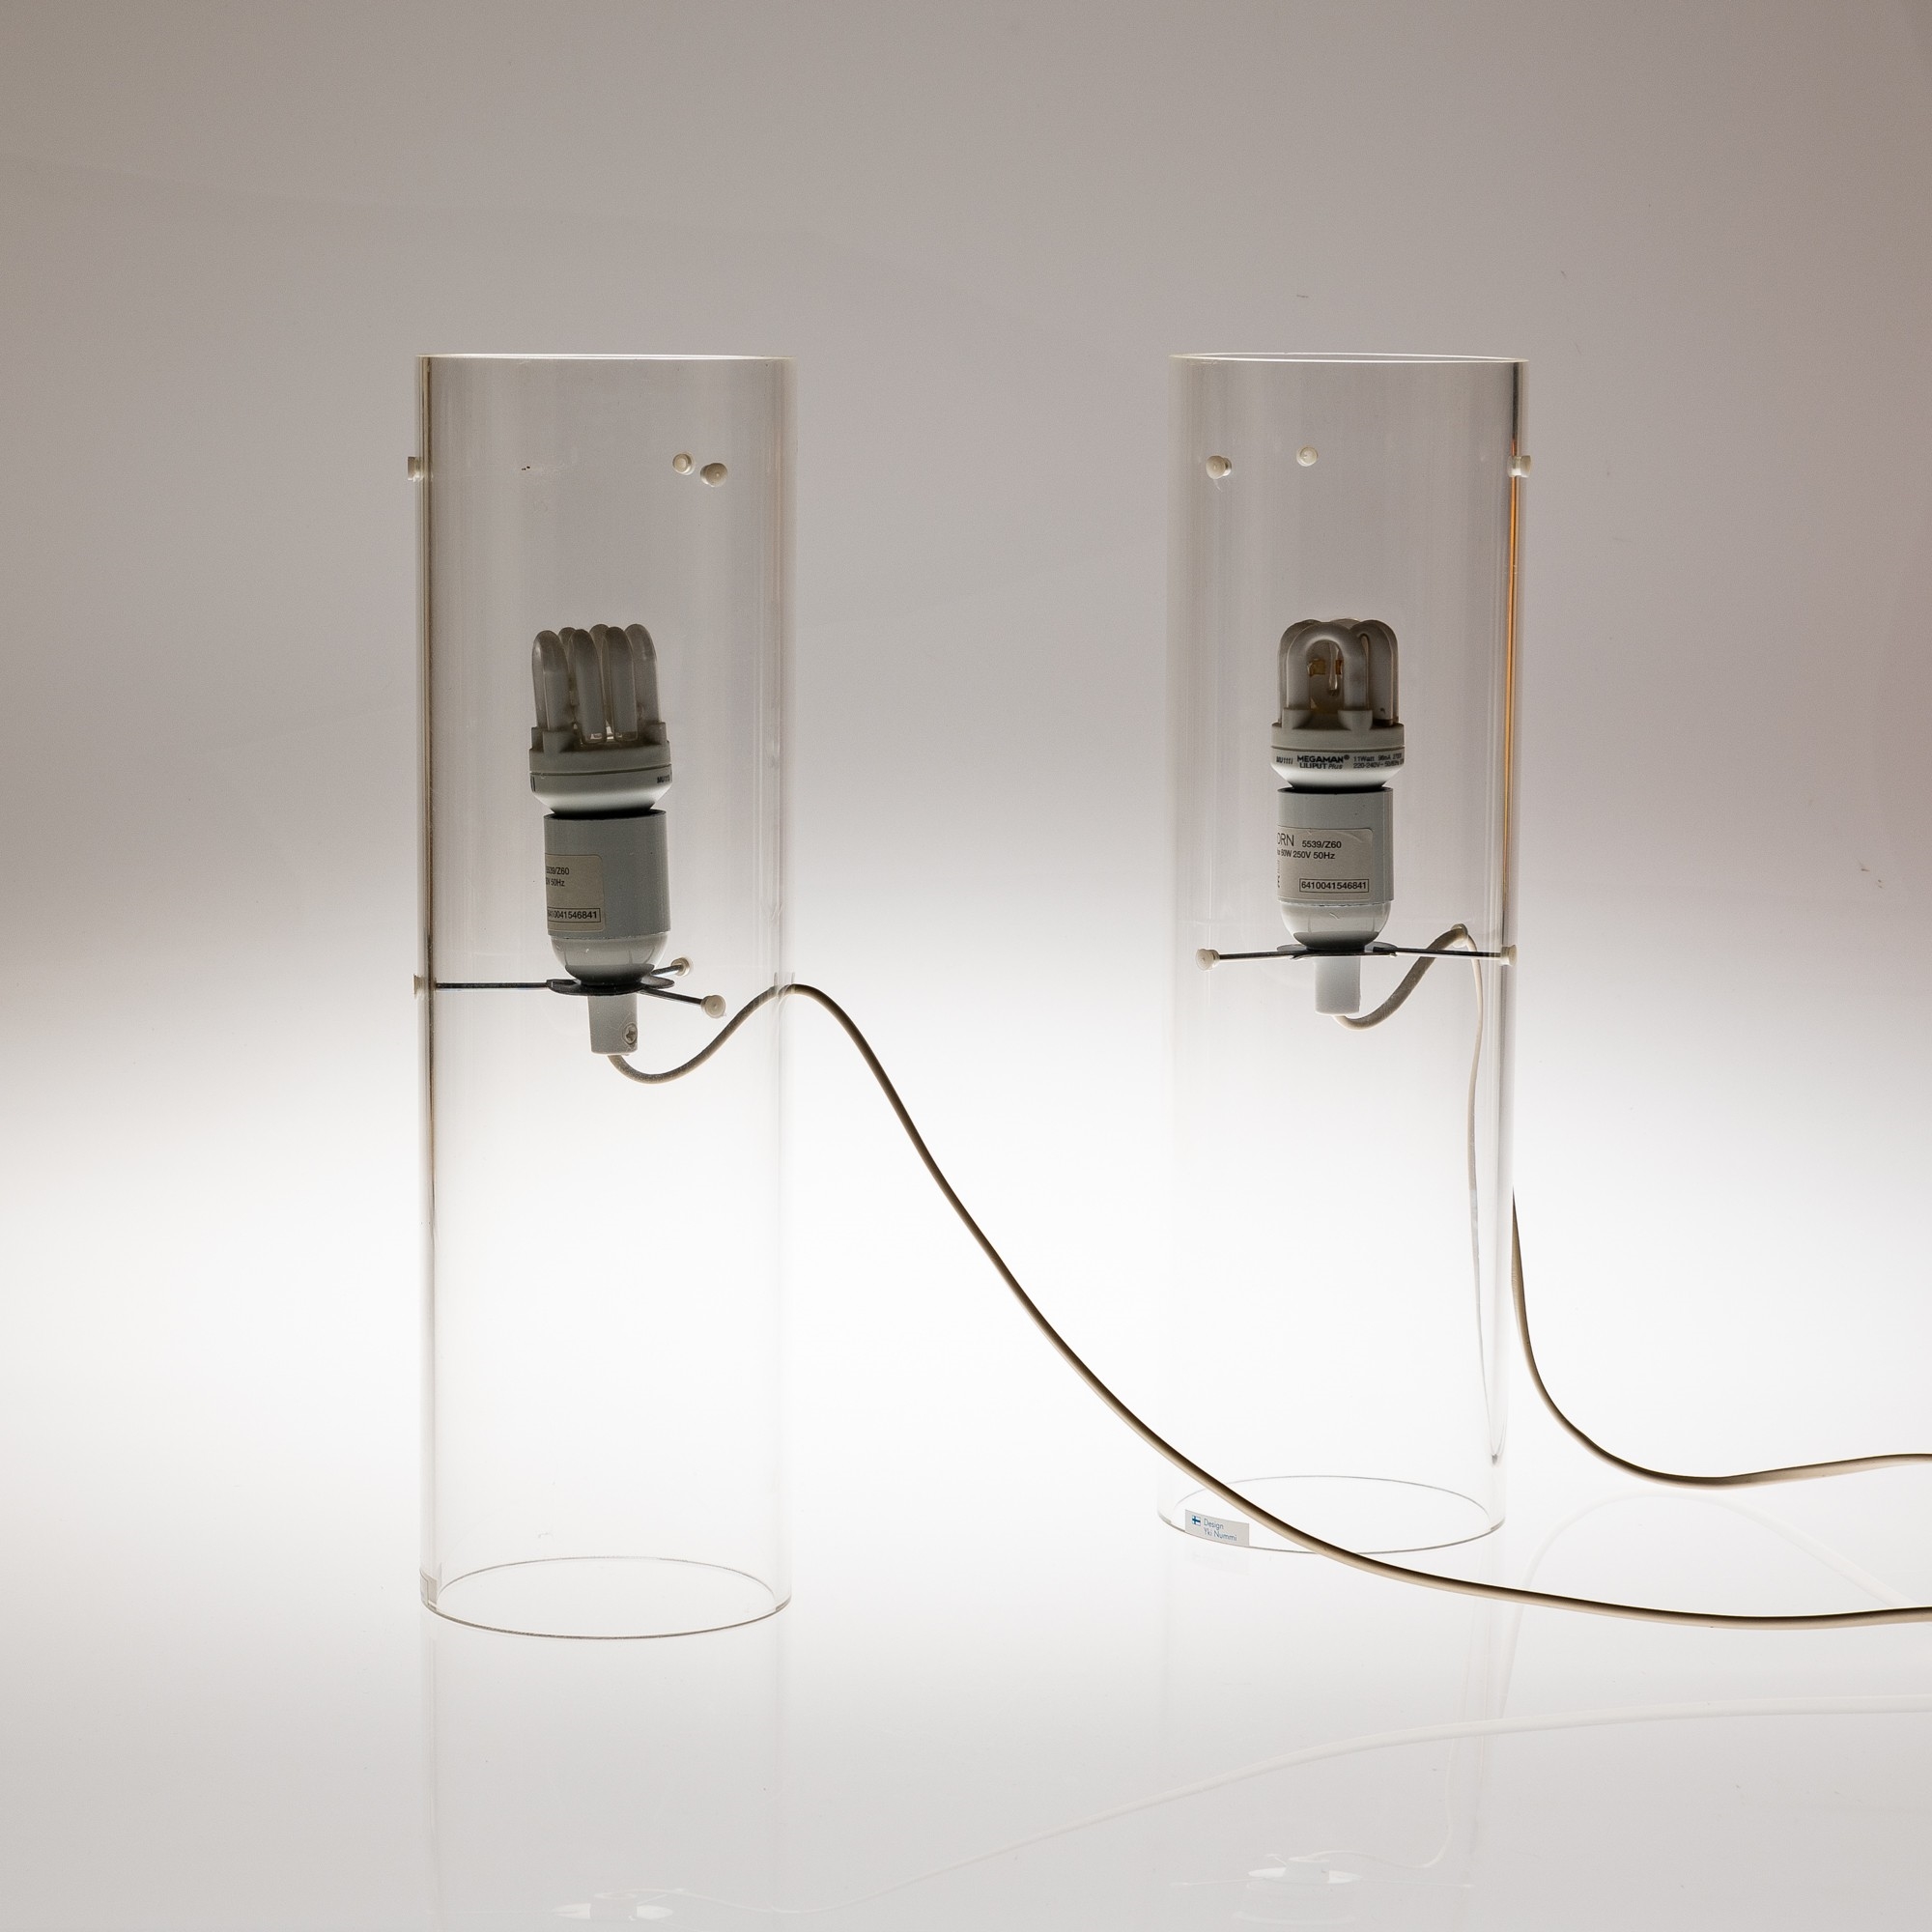 Artwork by Yki Nummi, Table lights, Modern Art, late 20th Century, Made of white acrylic